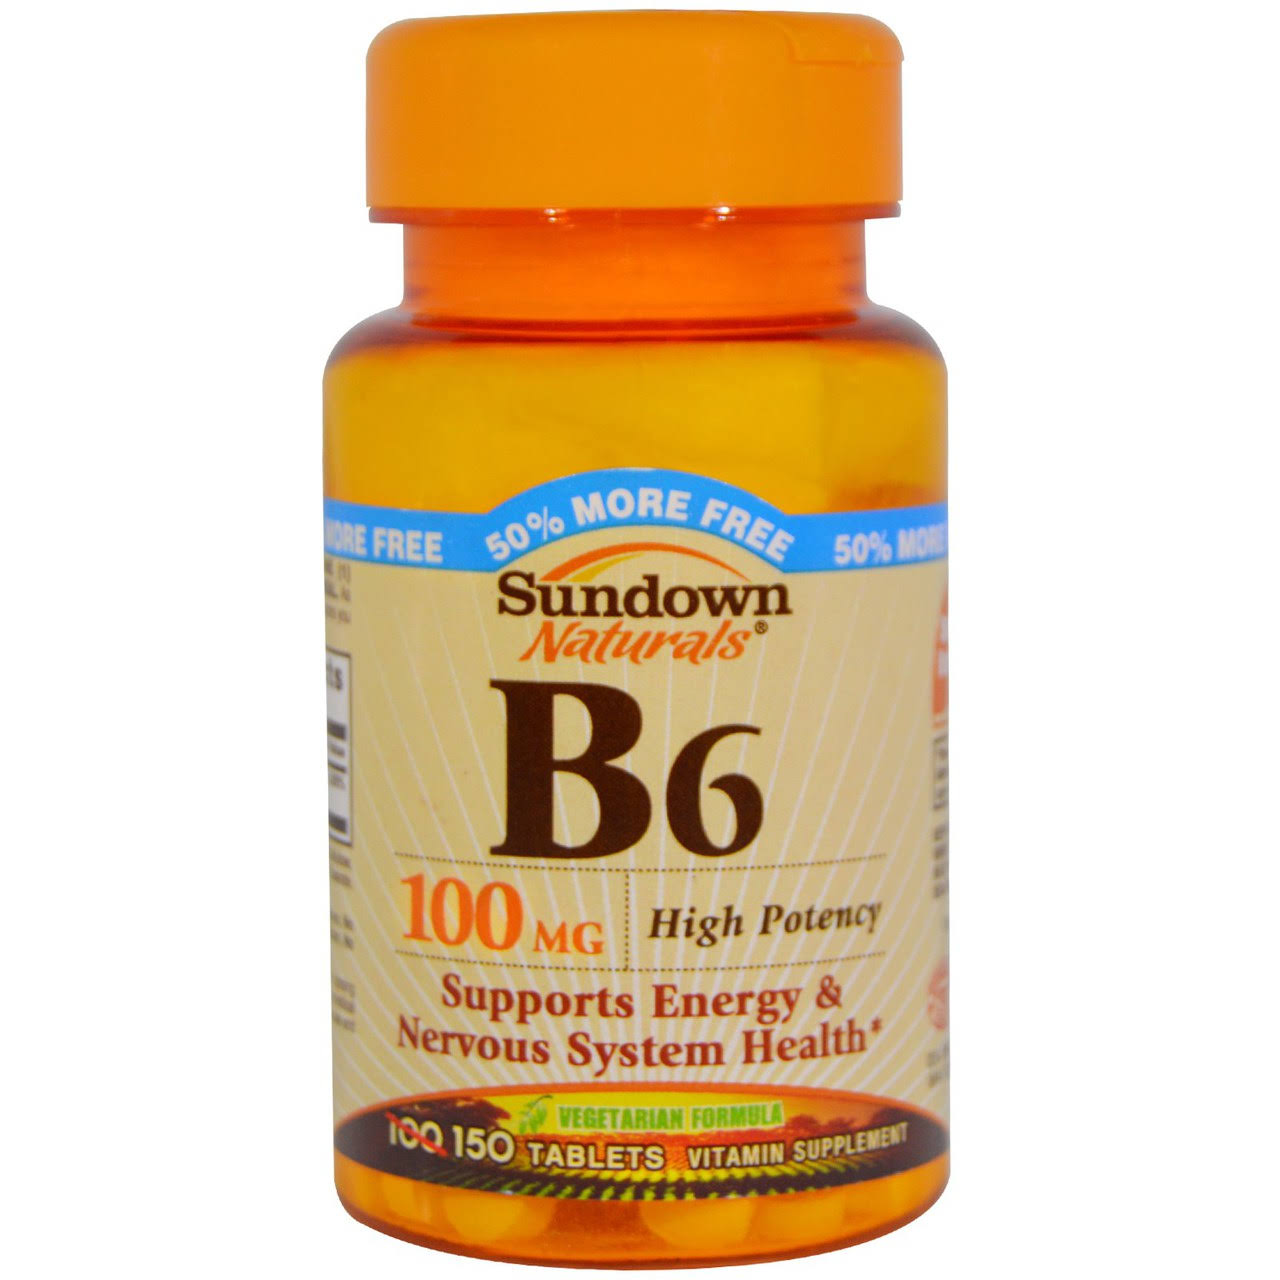 Sundown Naturals Vitamin B6 Supplement - 100mg, 150 Tablets